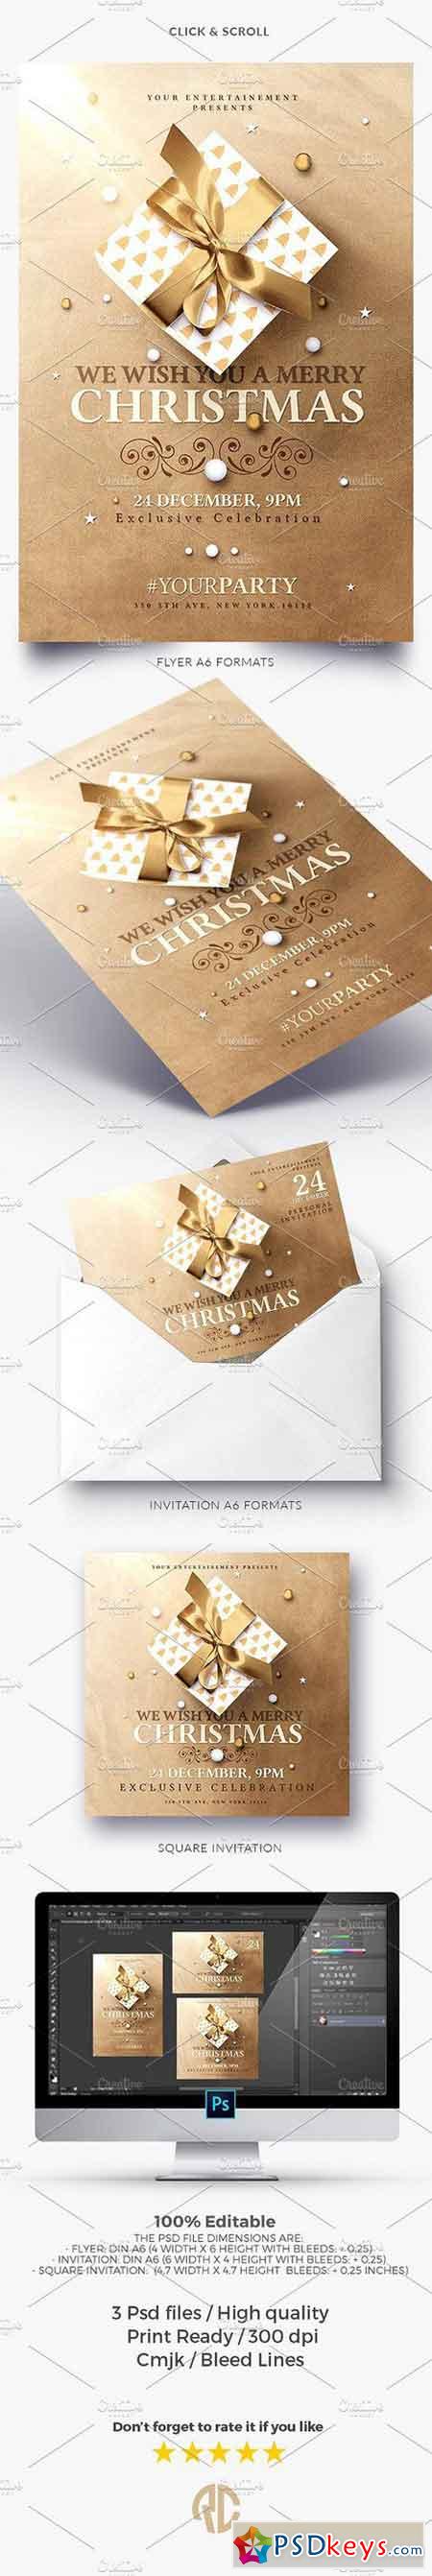 Christmas Invitations Psd Package v2 1871215